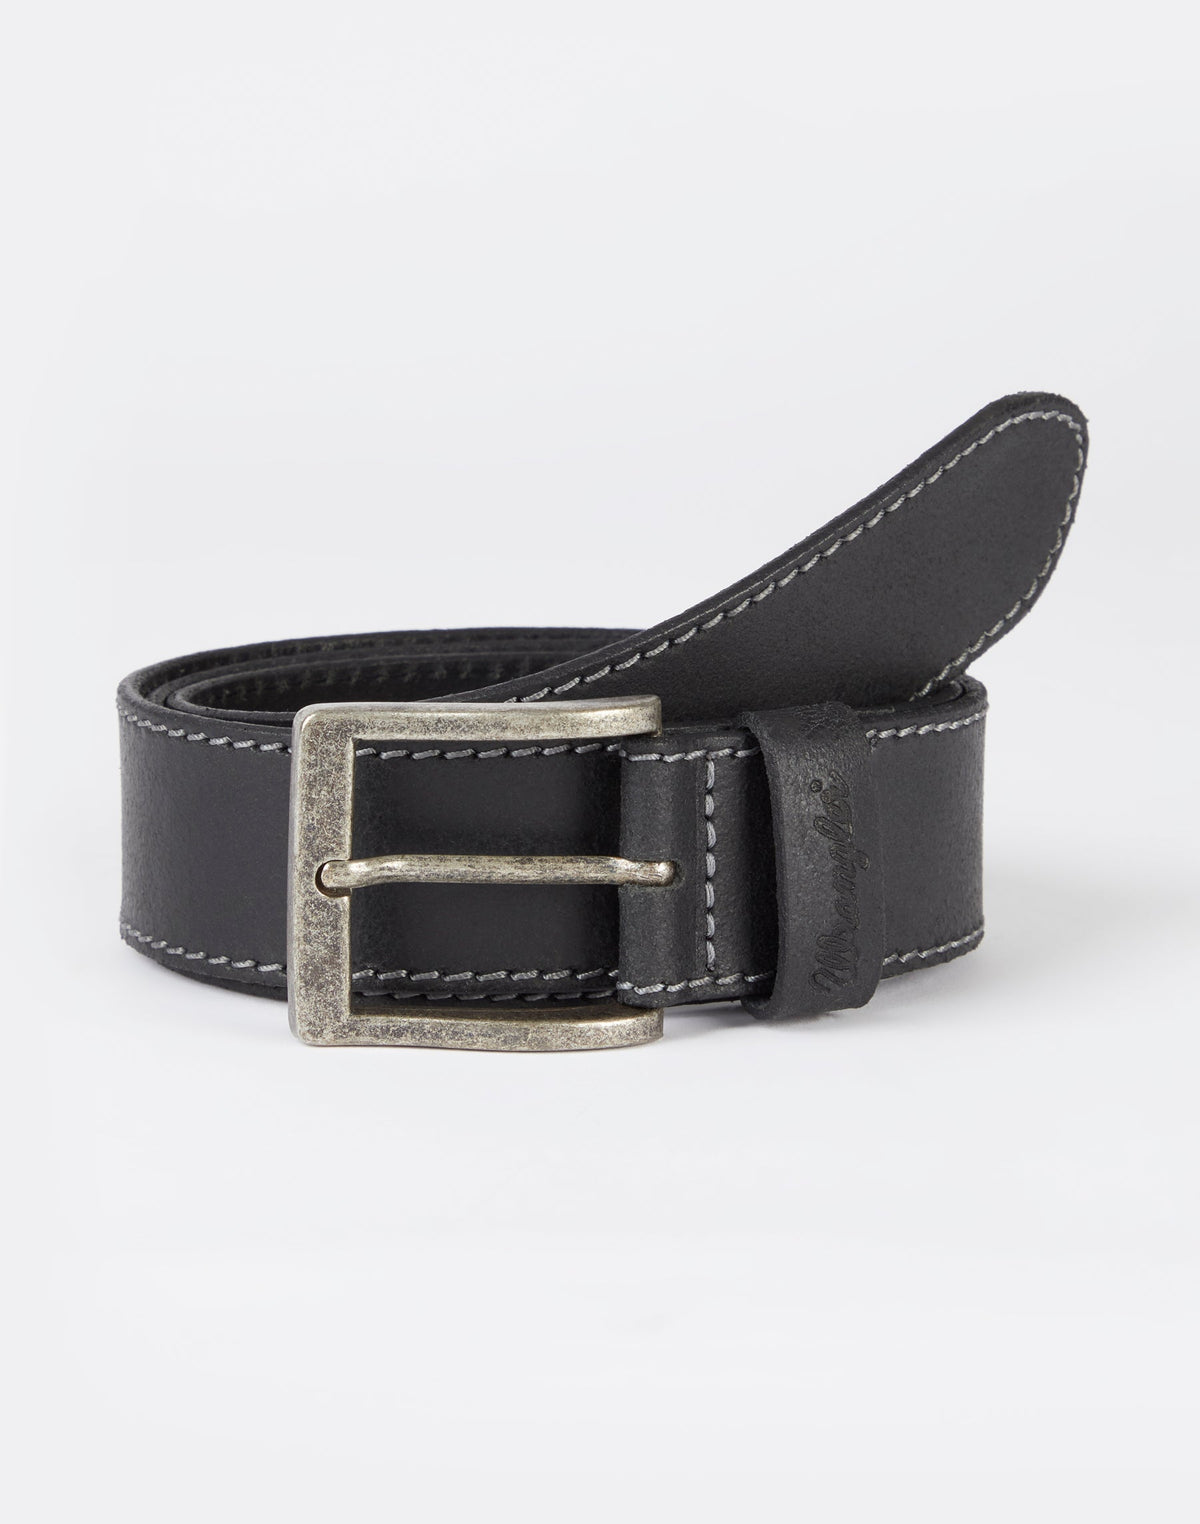 Stitched Belt in Black